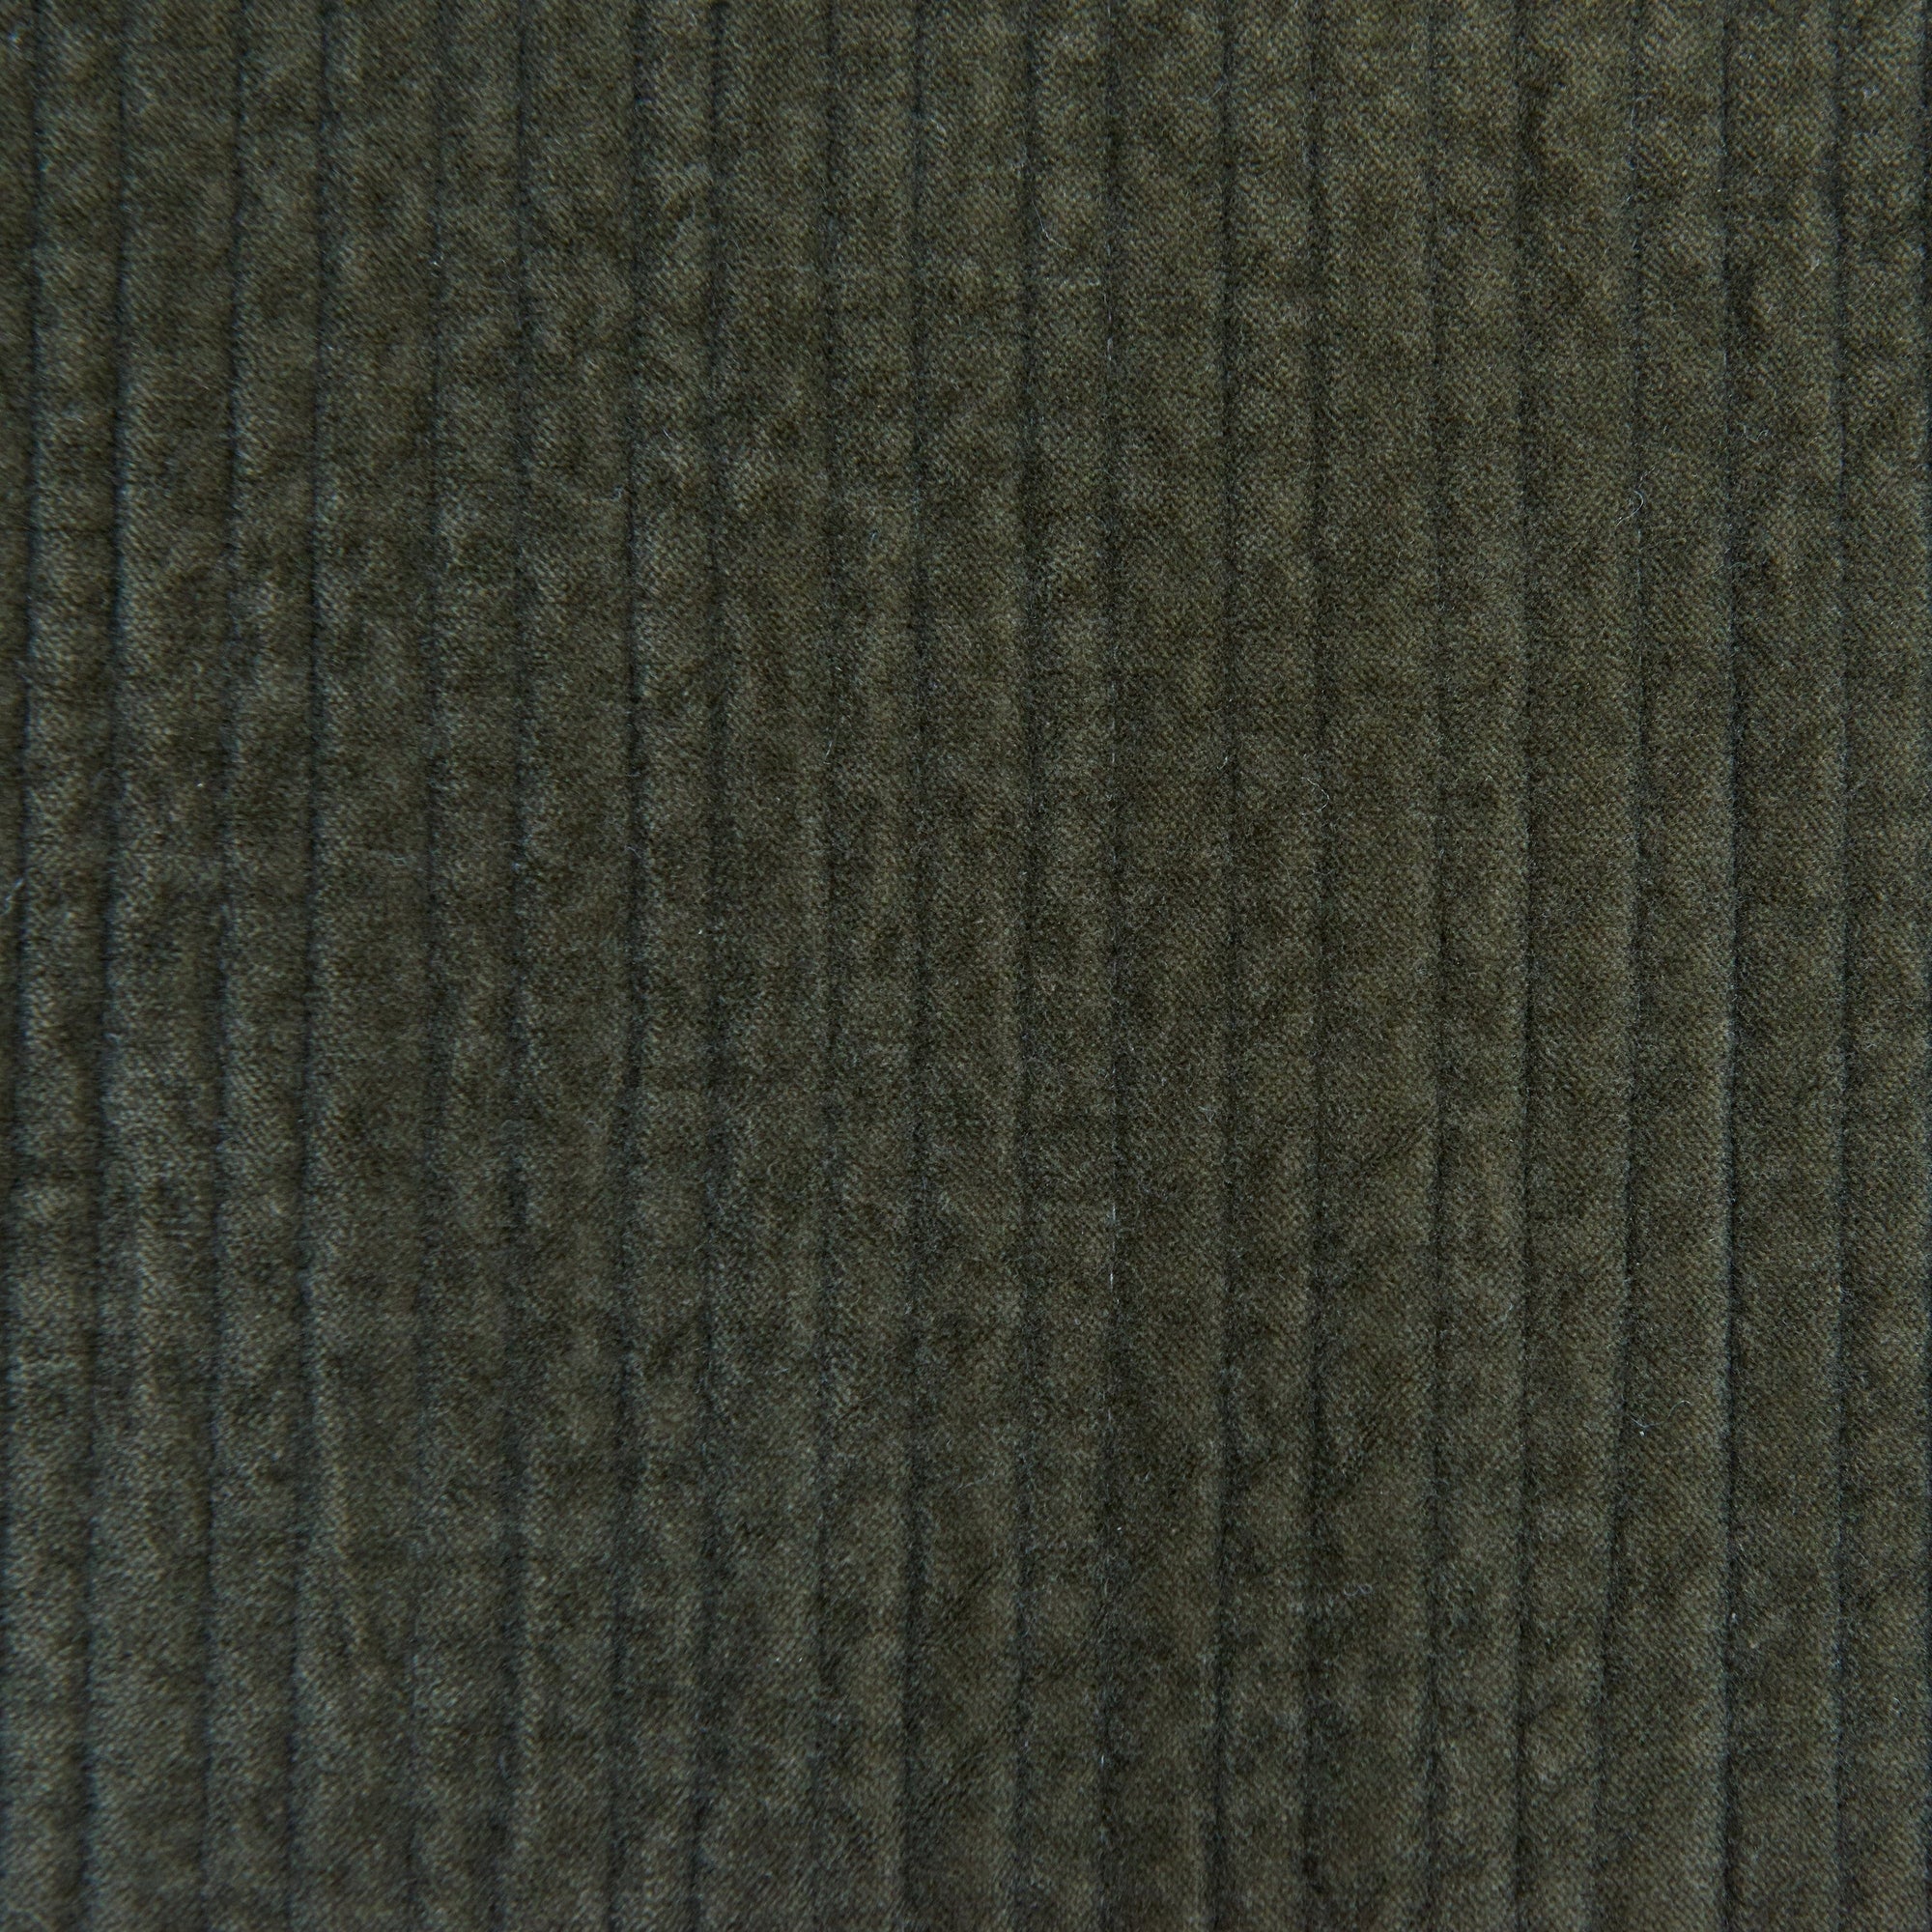 Stonewashed Cotton Velvet Quilt Set - Retro Barn Country Linens